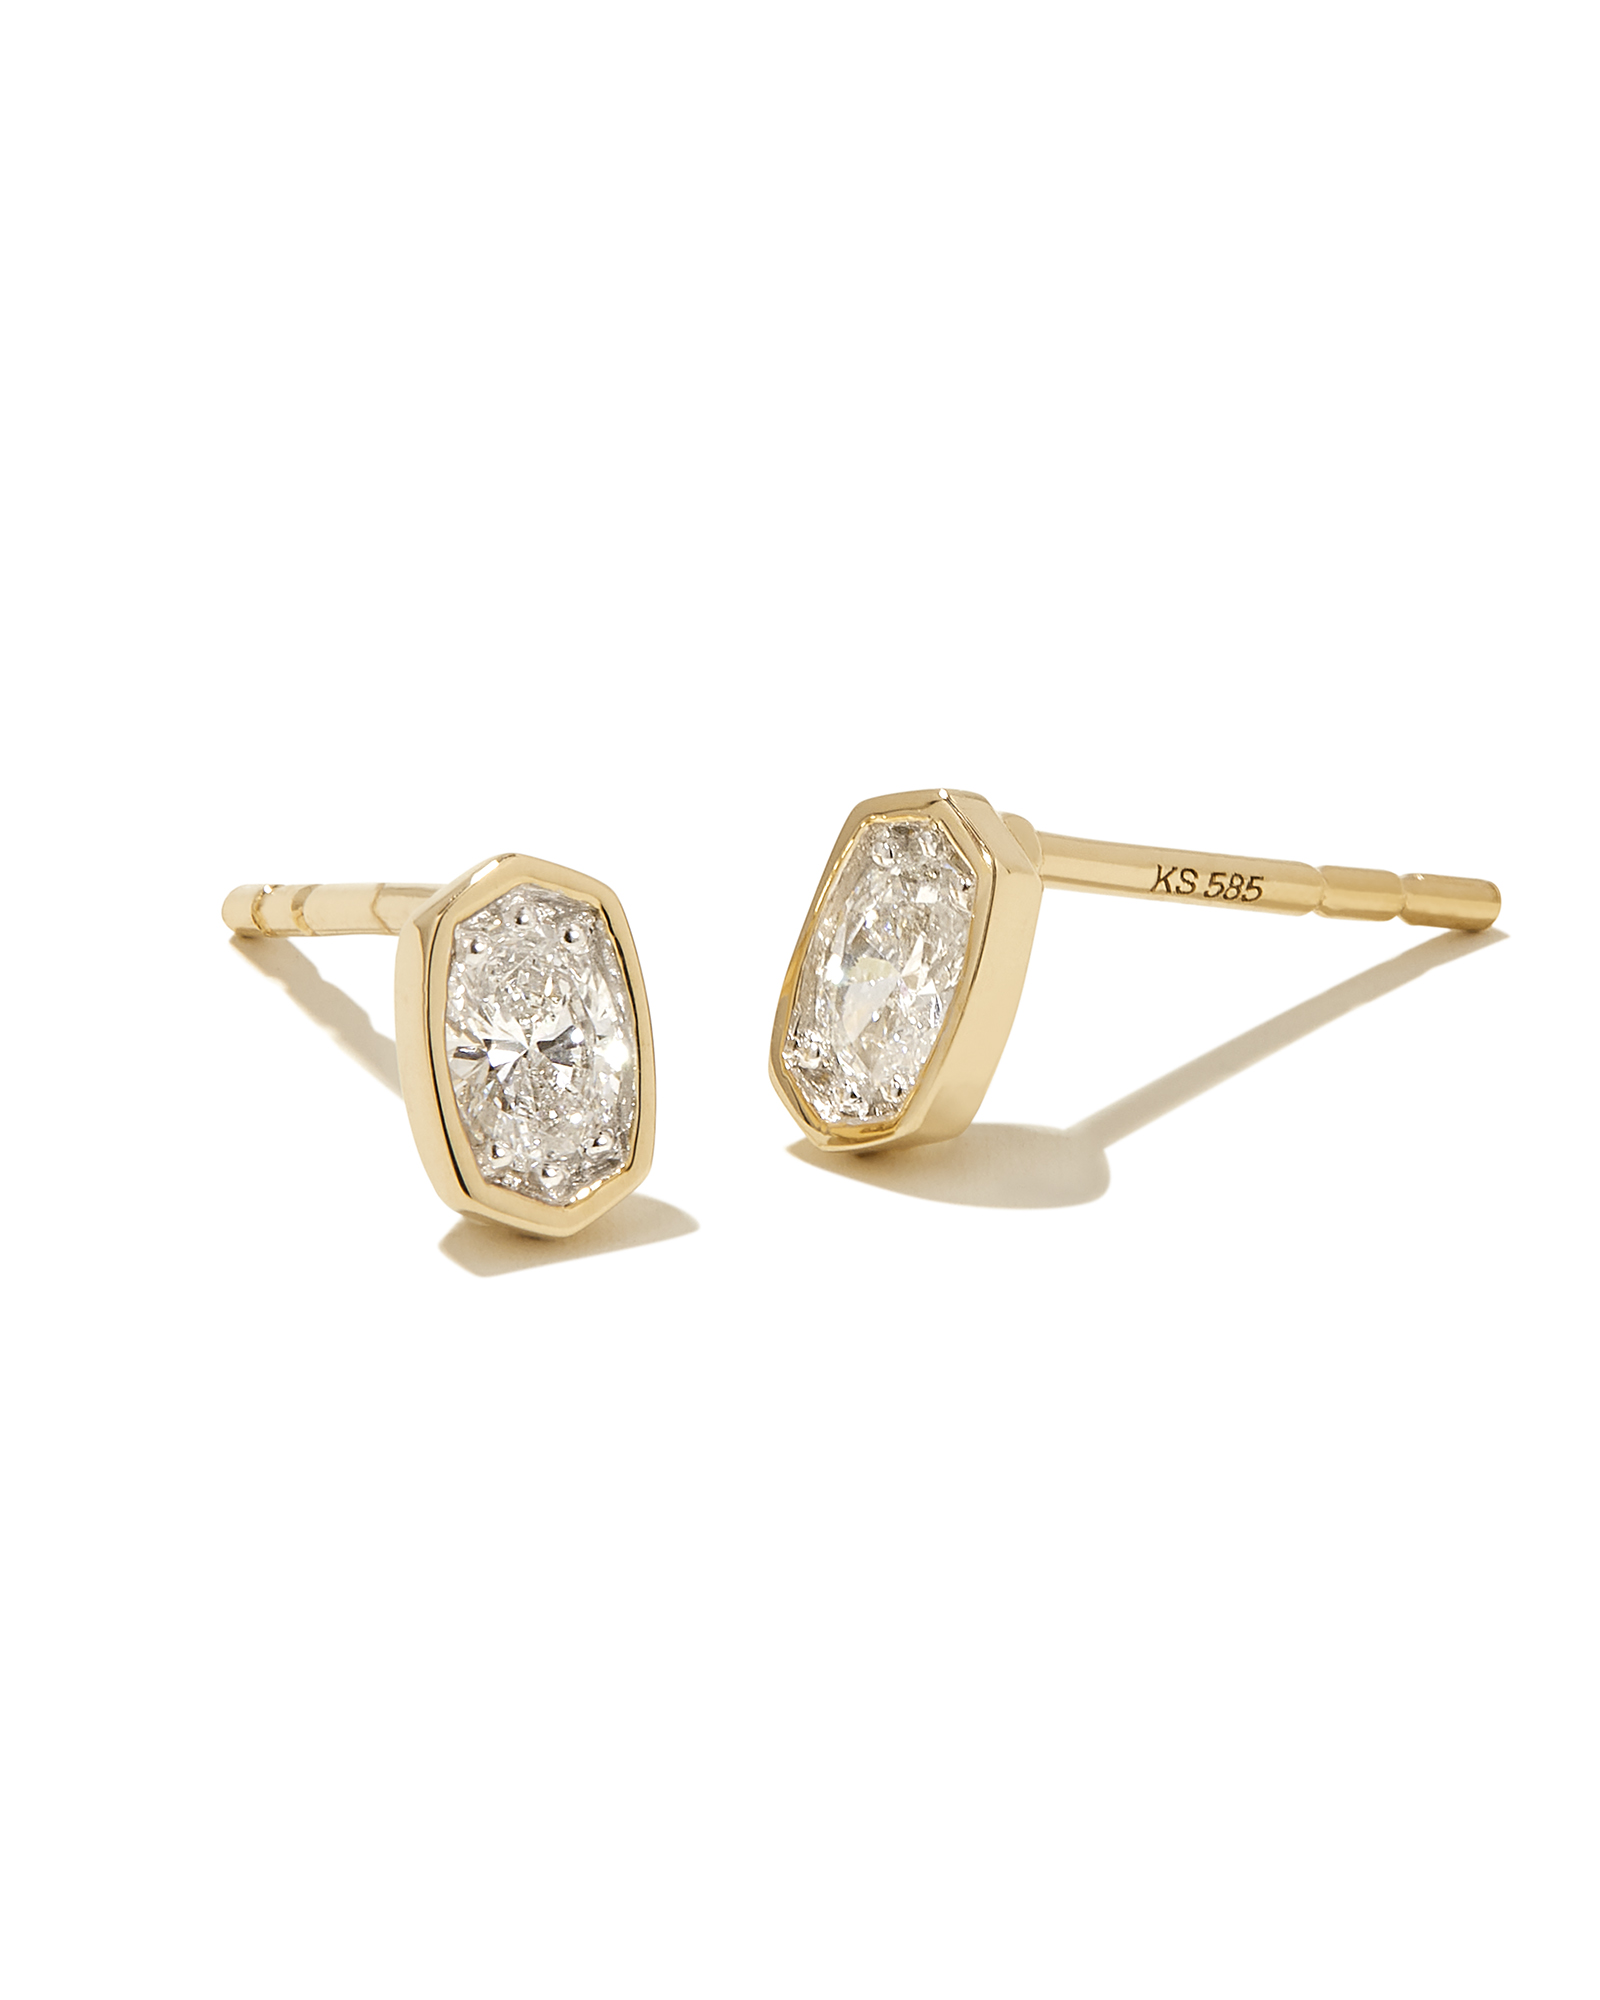 Marisa 14k Yellow Gold Oval Solitaire Stud Earrings in White Diamond | Kendra Scott